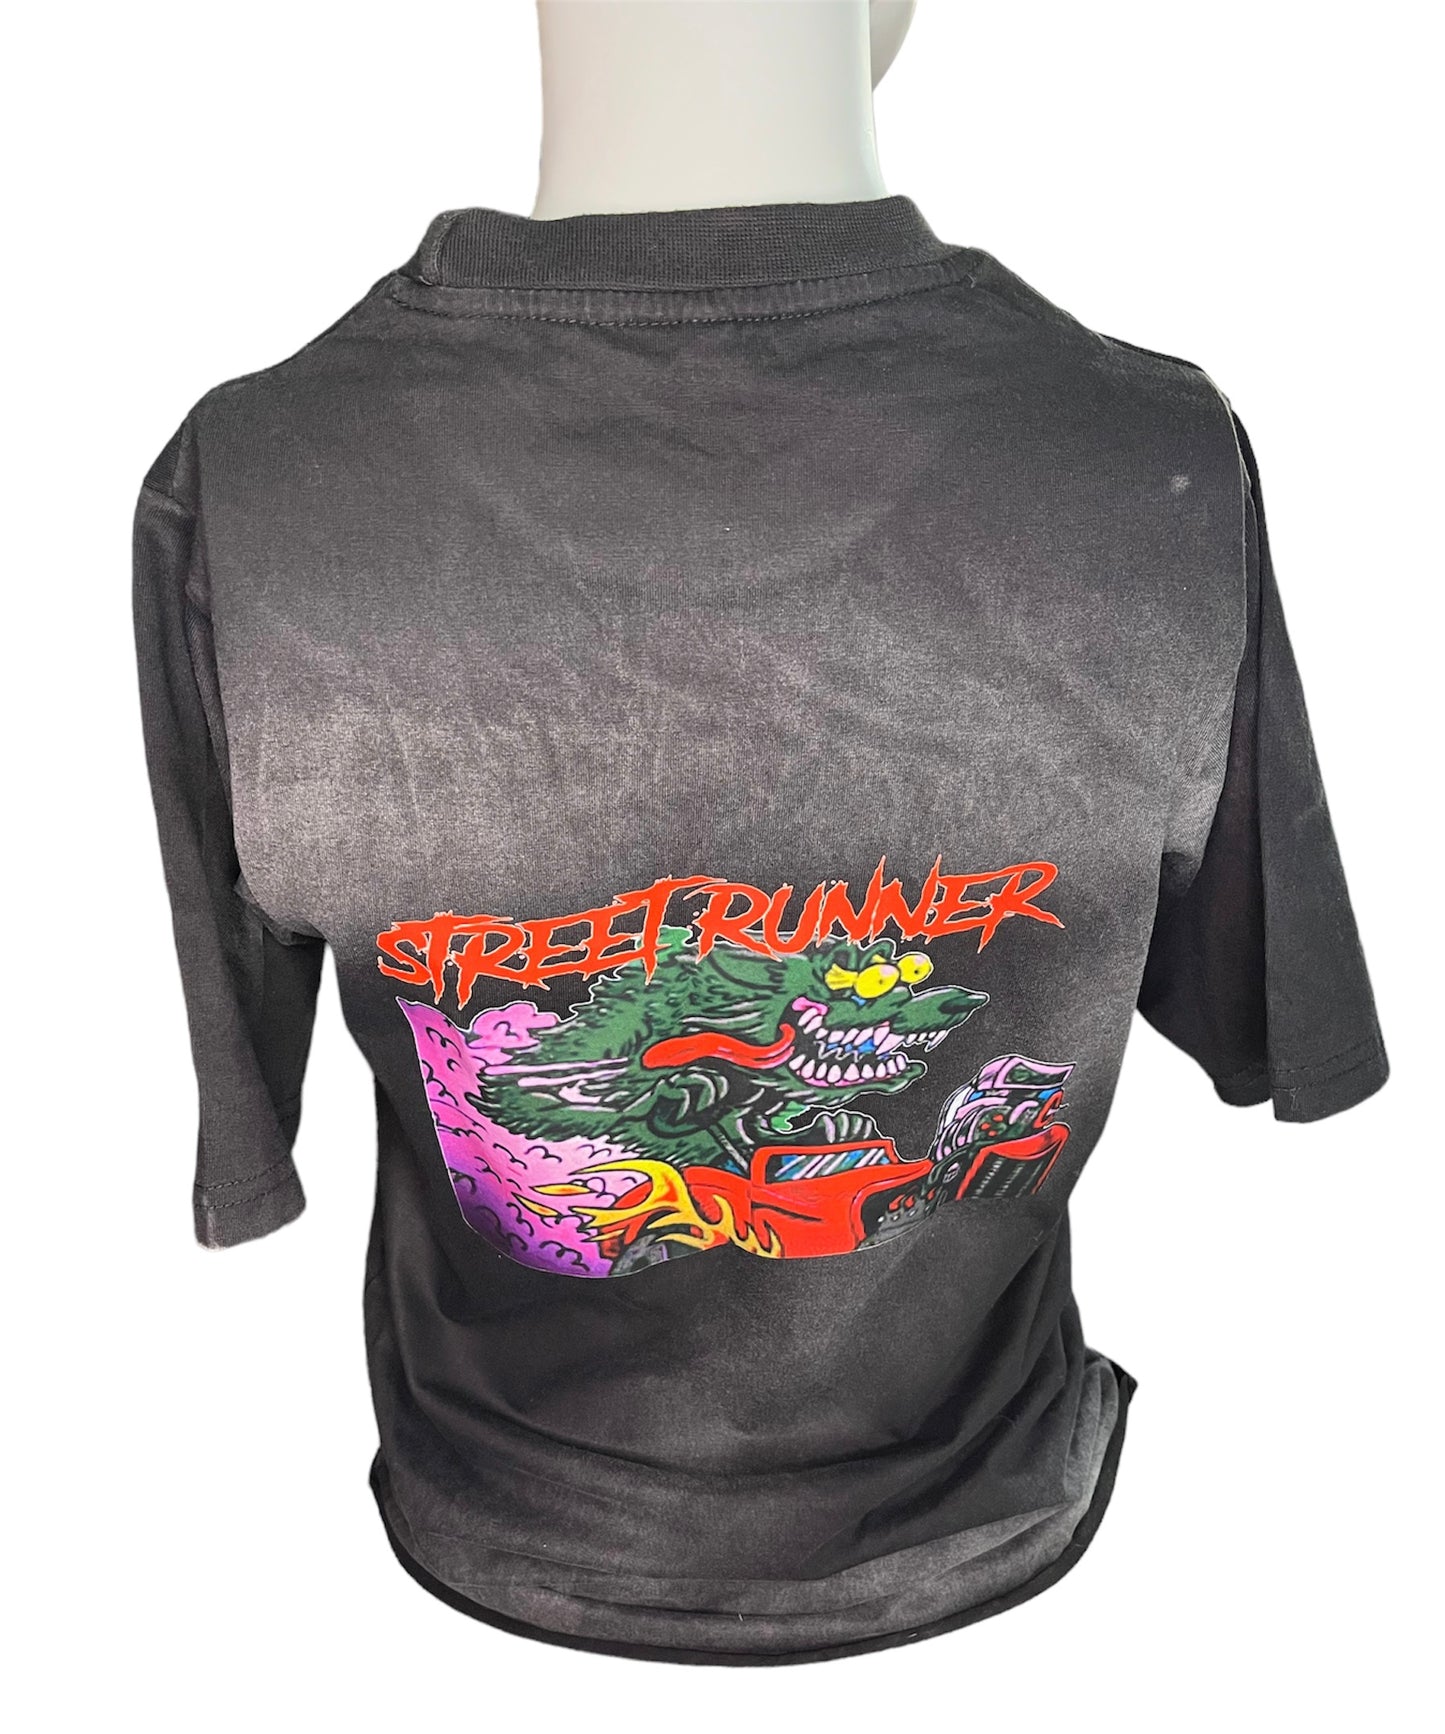 Street Runner Premium Shirt